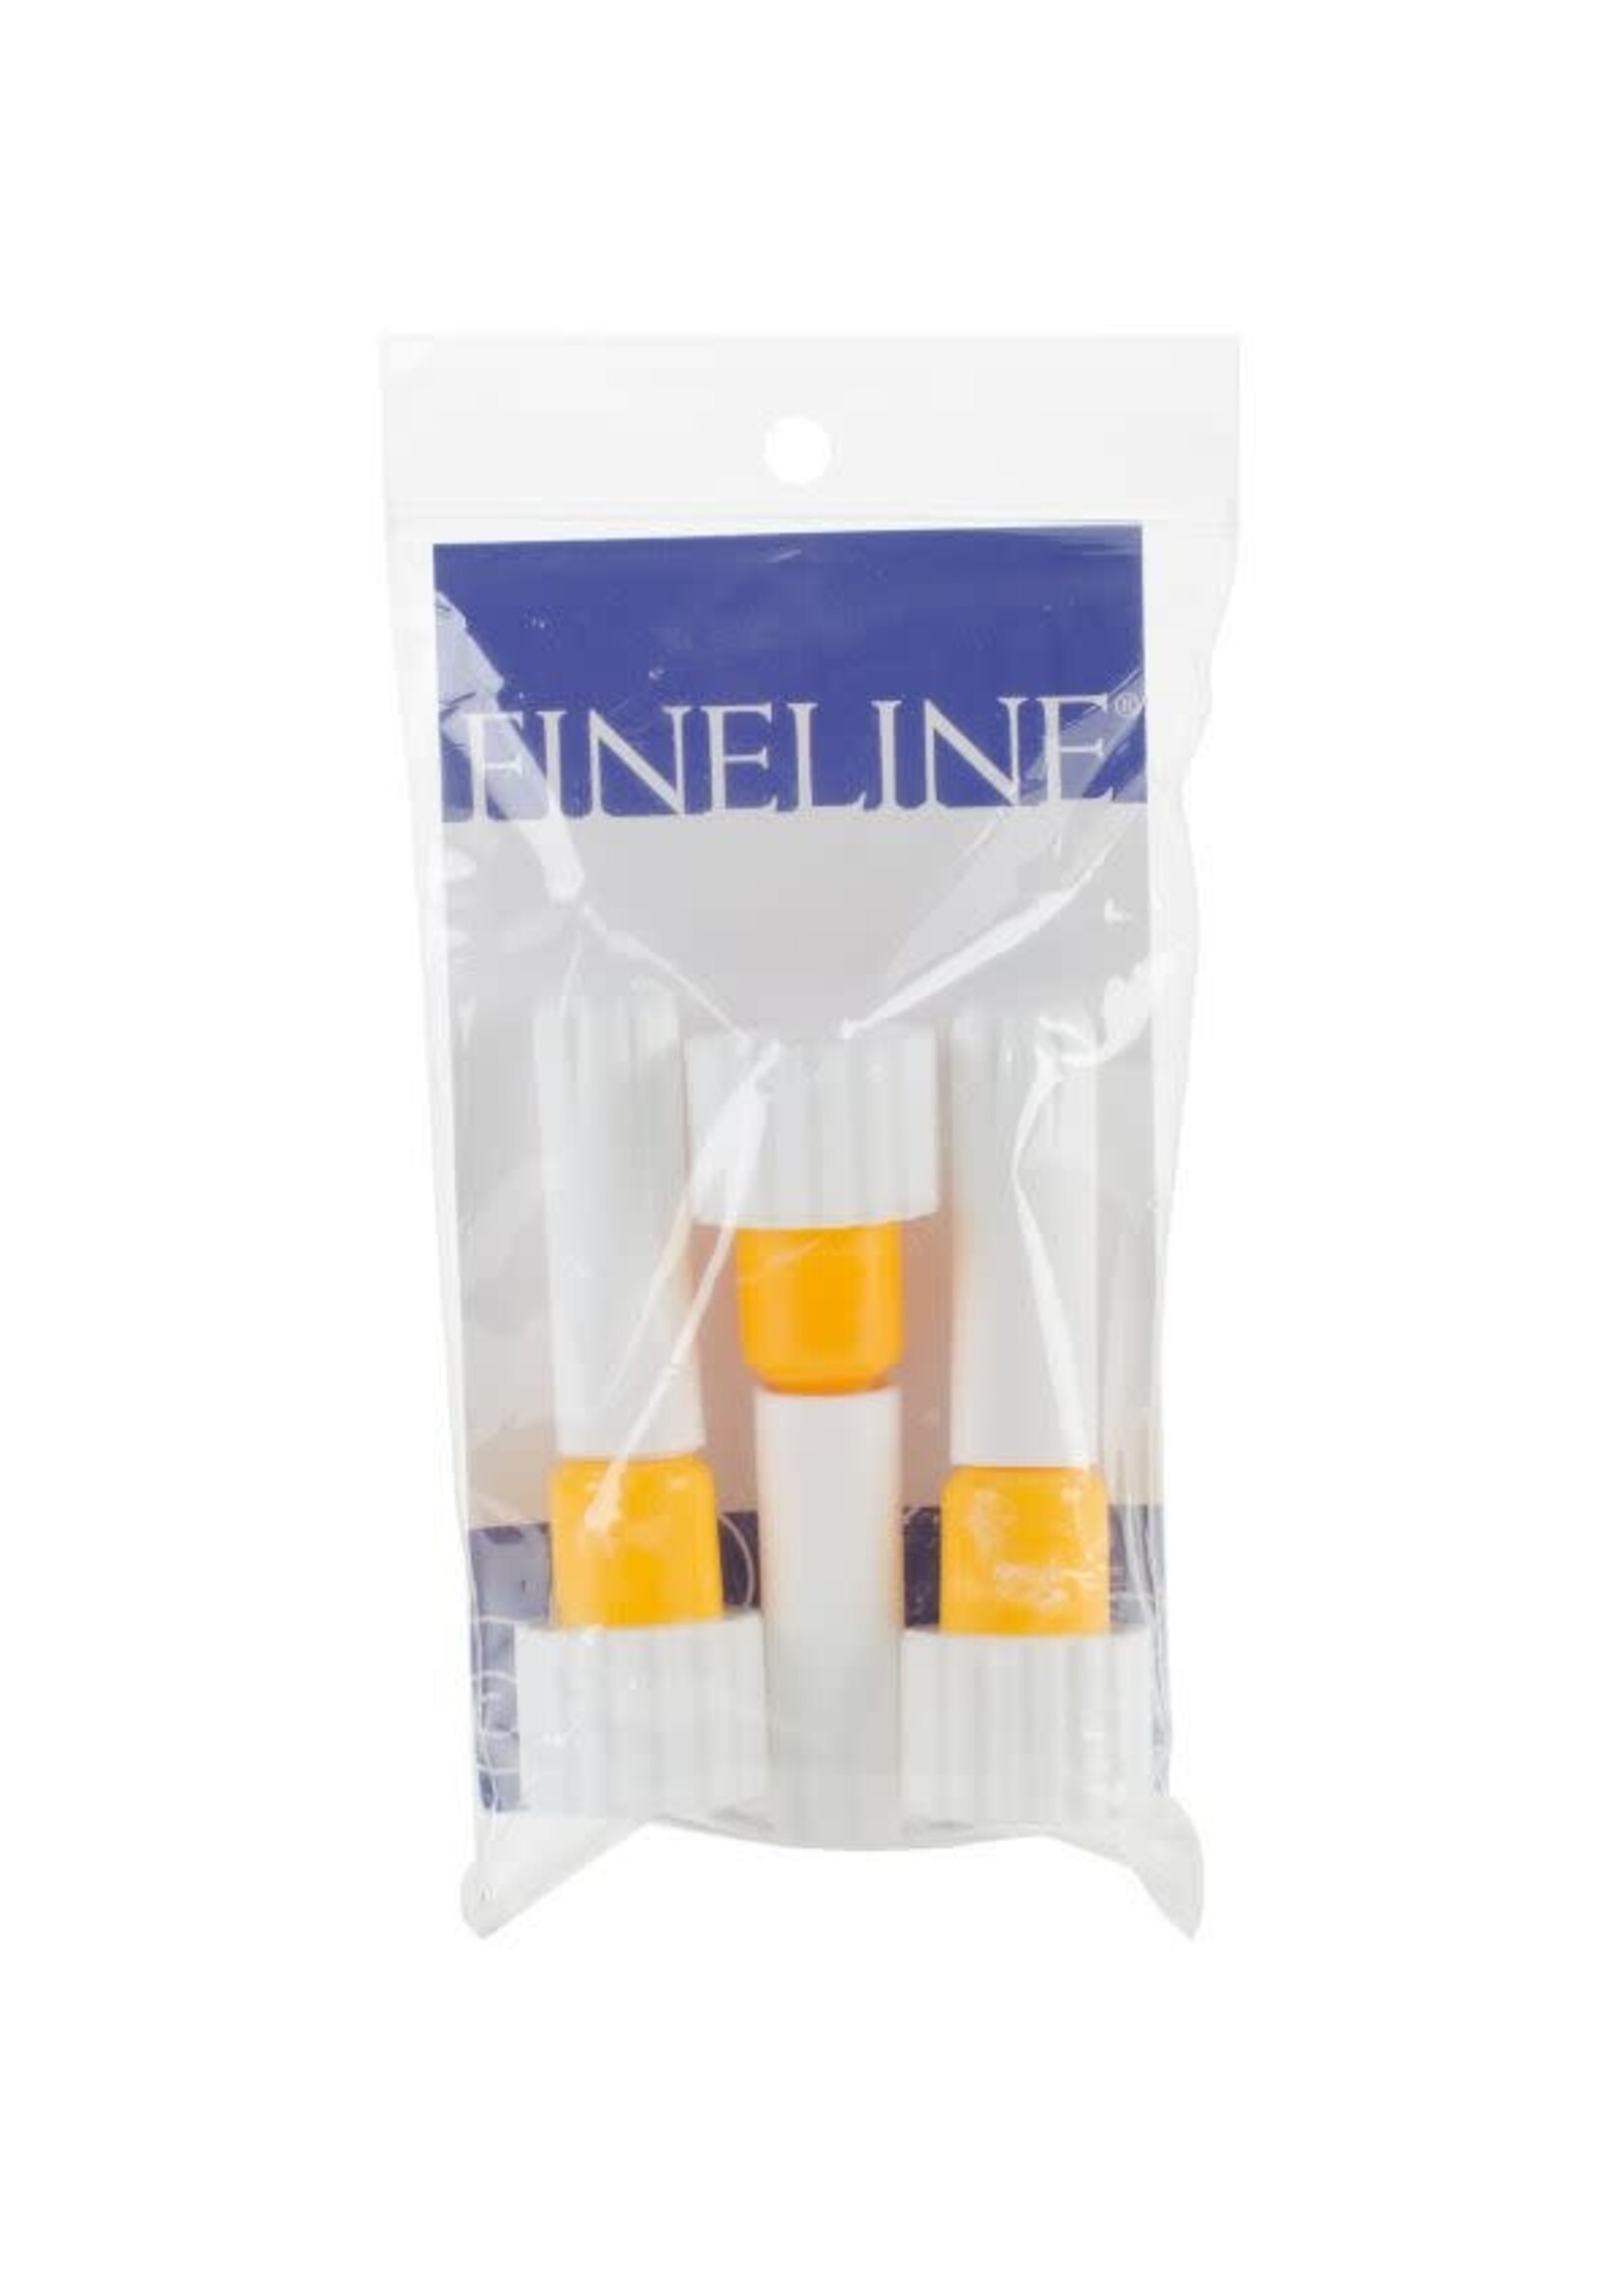 Fineline Applicator 3 pack (Applicators only); cap diameter 18g-1 tip